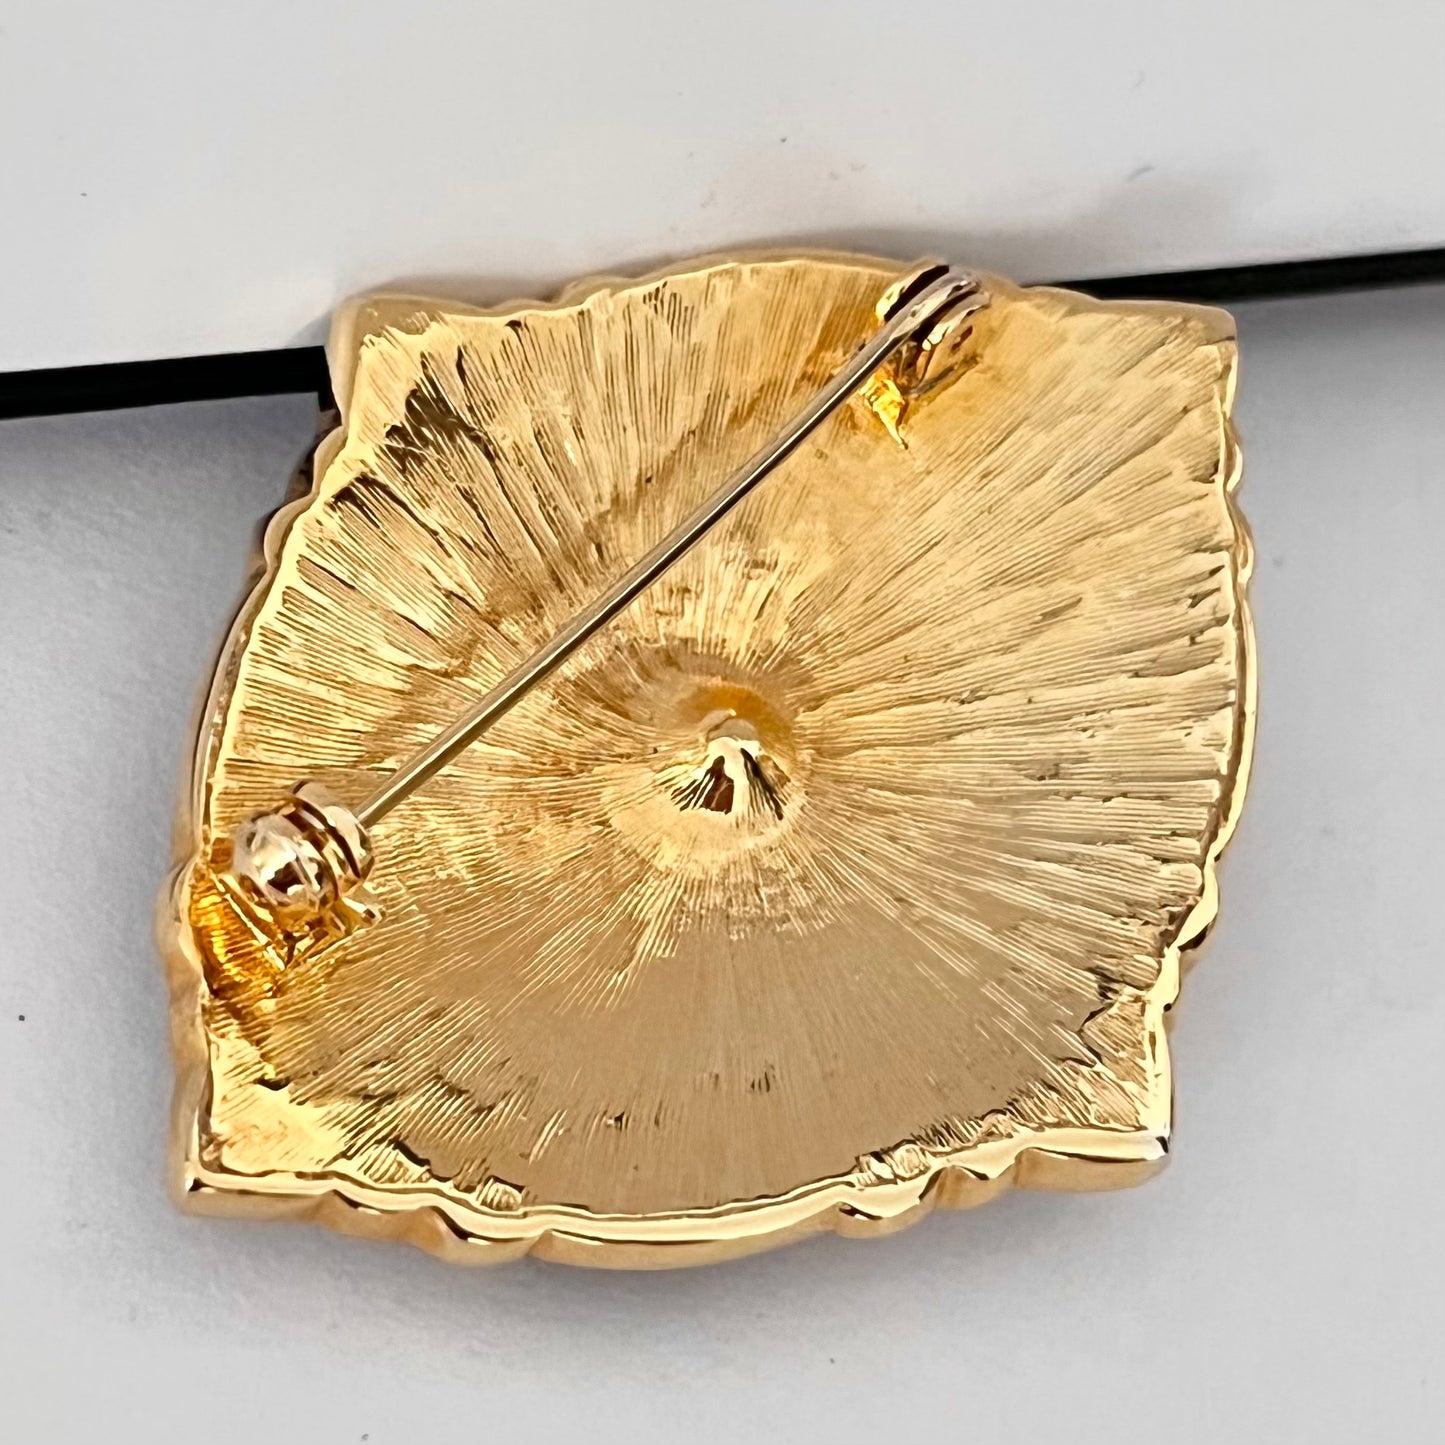 1980s Gold Plated Black Enamel Diamanté Brooch